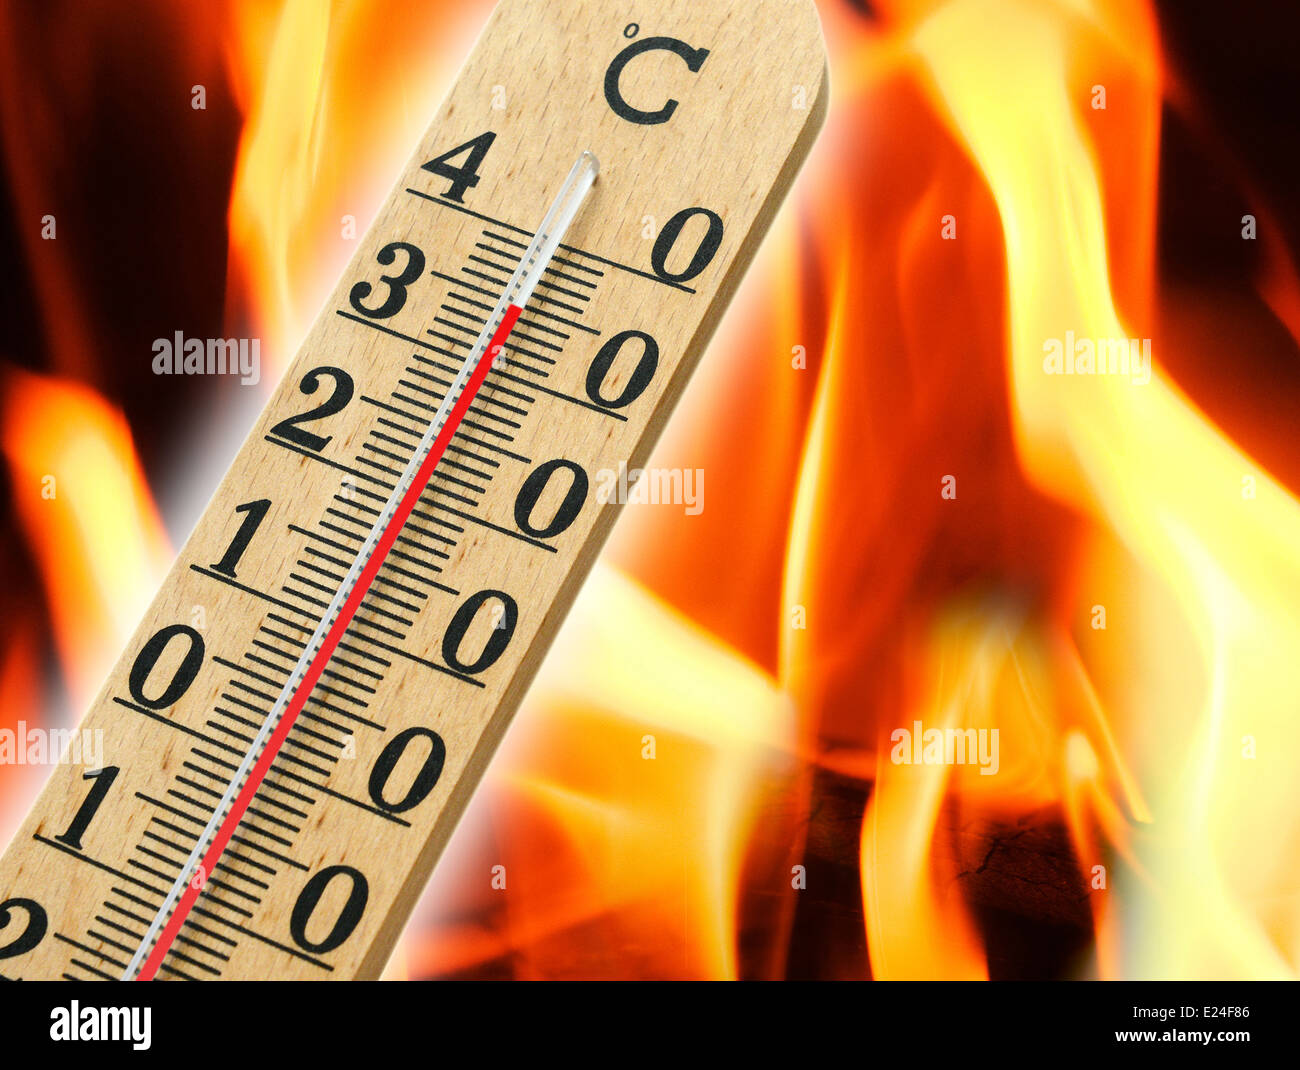 Mercury thermometer indicating high temperature Stock Photo